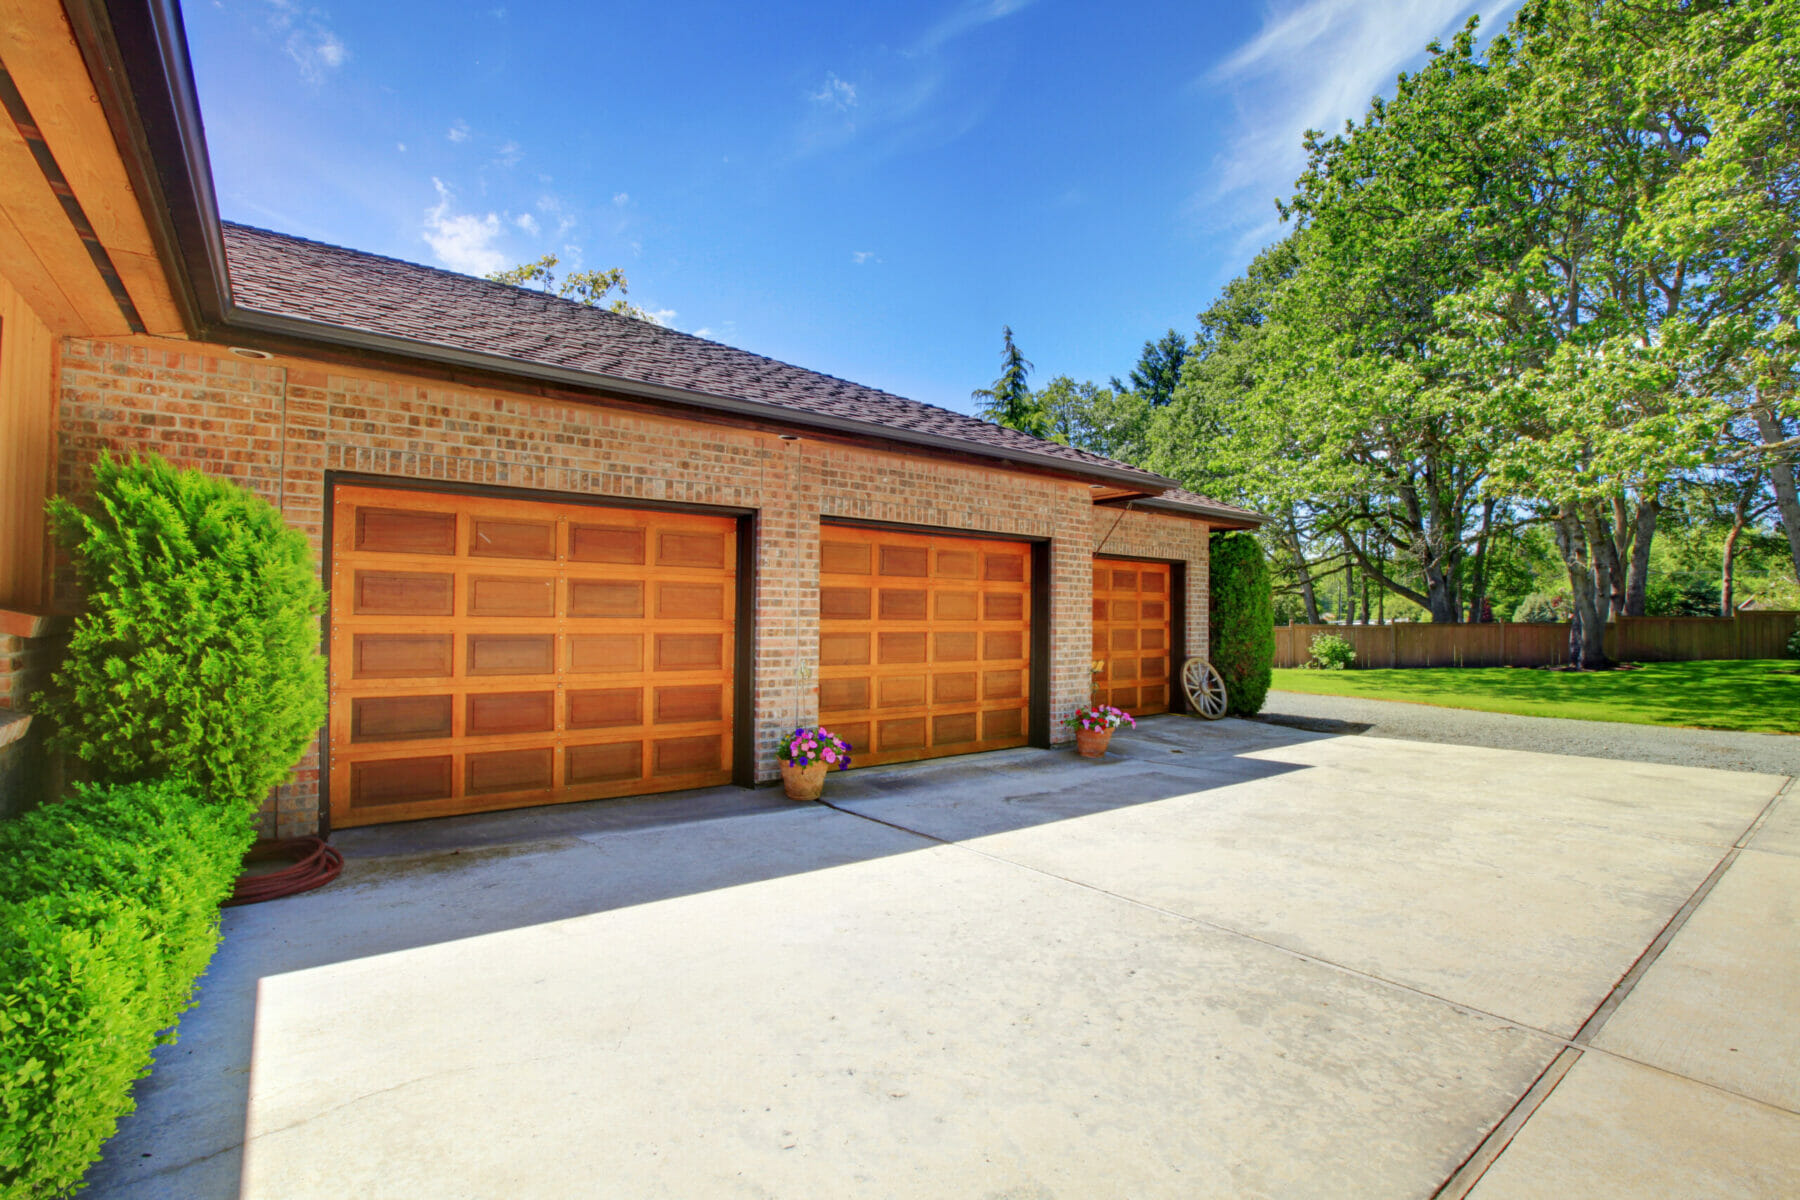 Large three bay garage with brown doors